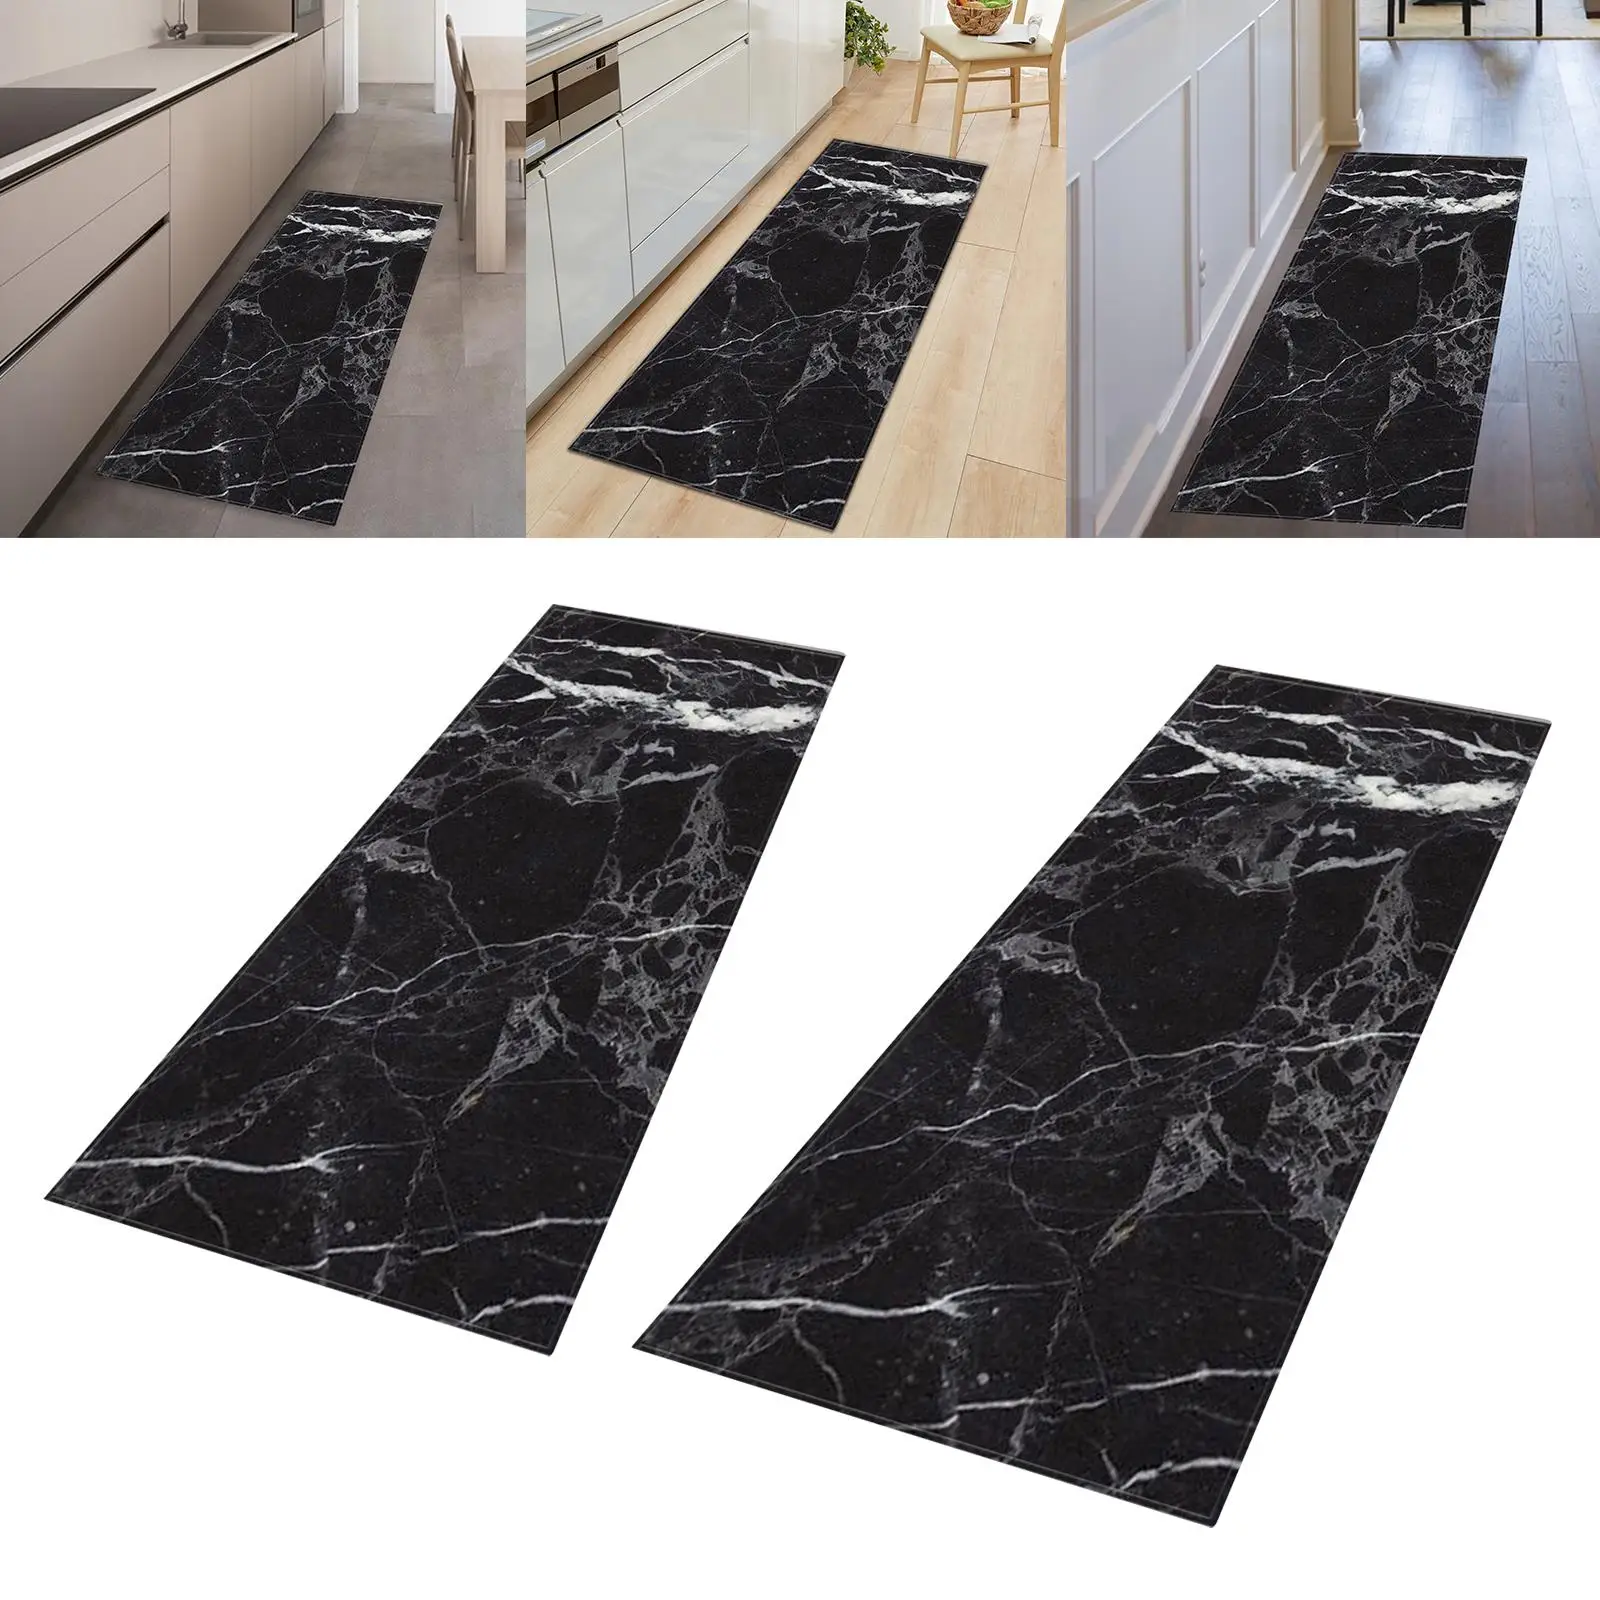 Non Slip Area Rugs Kitchen Floor Mat Decorative Area Carpet for Bathroom Kitchen